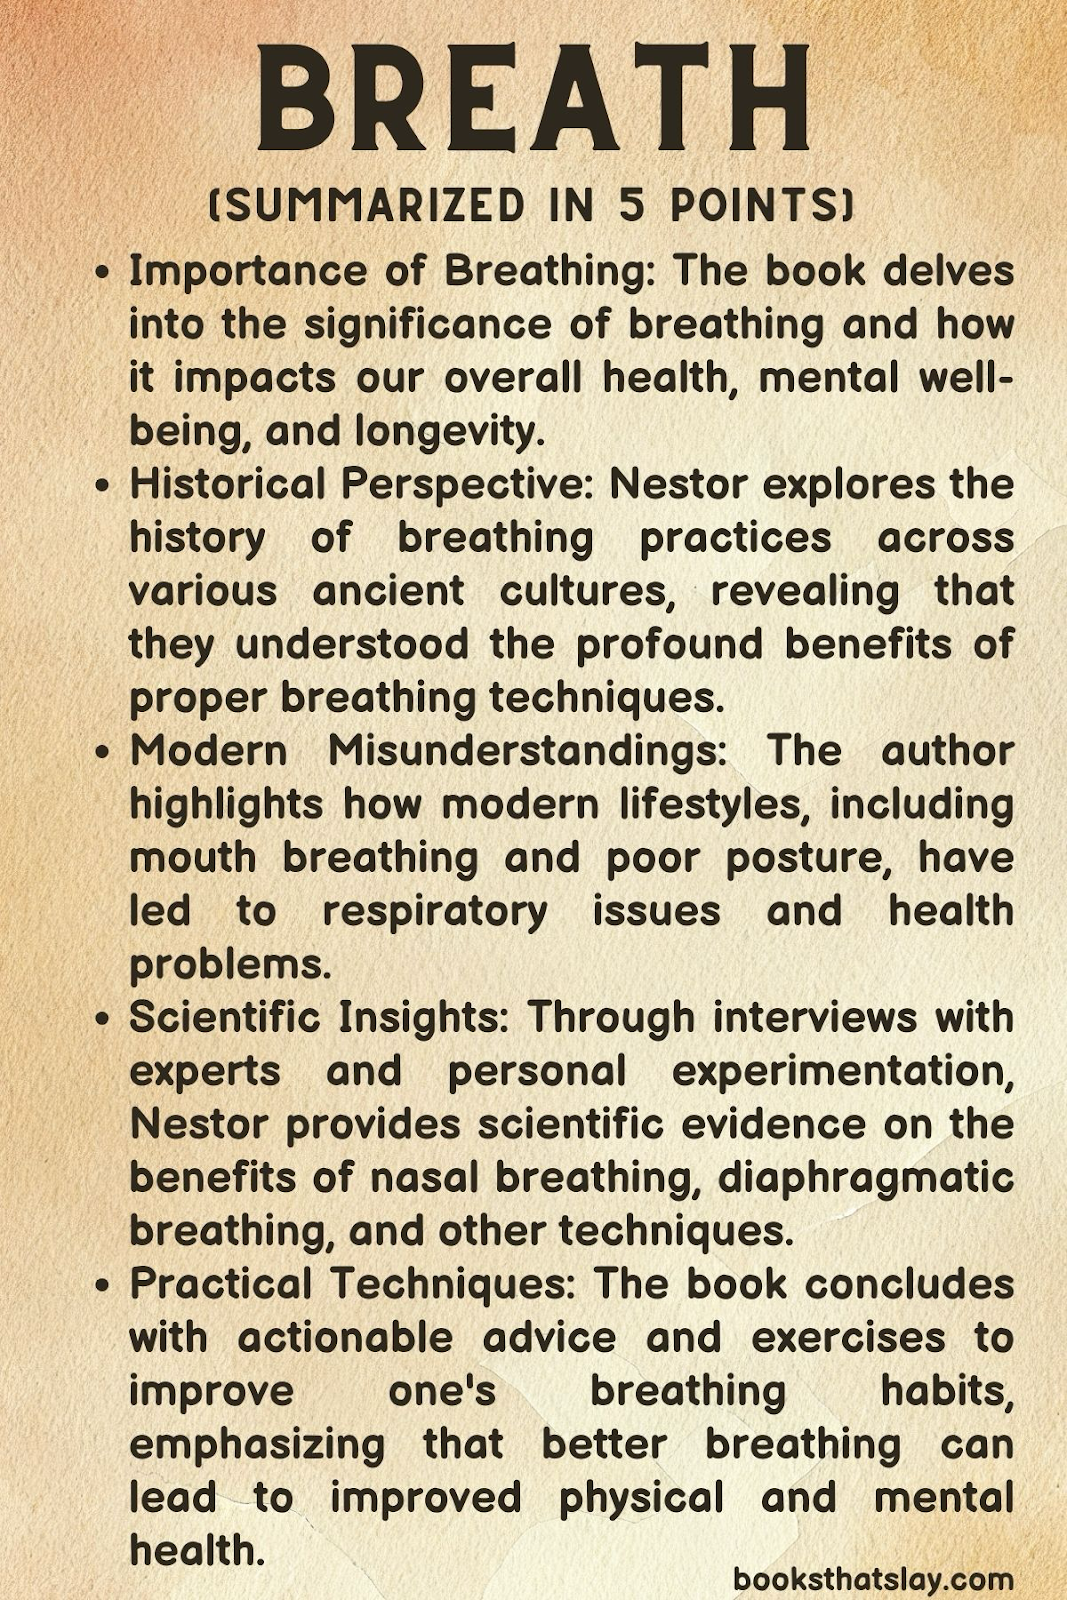 Breath by James Nestor Summary